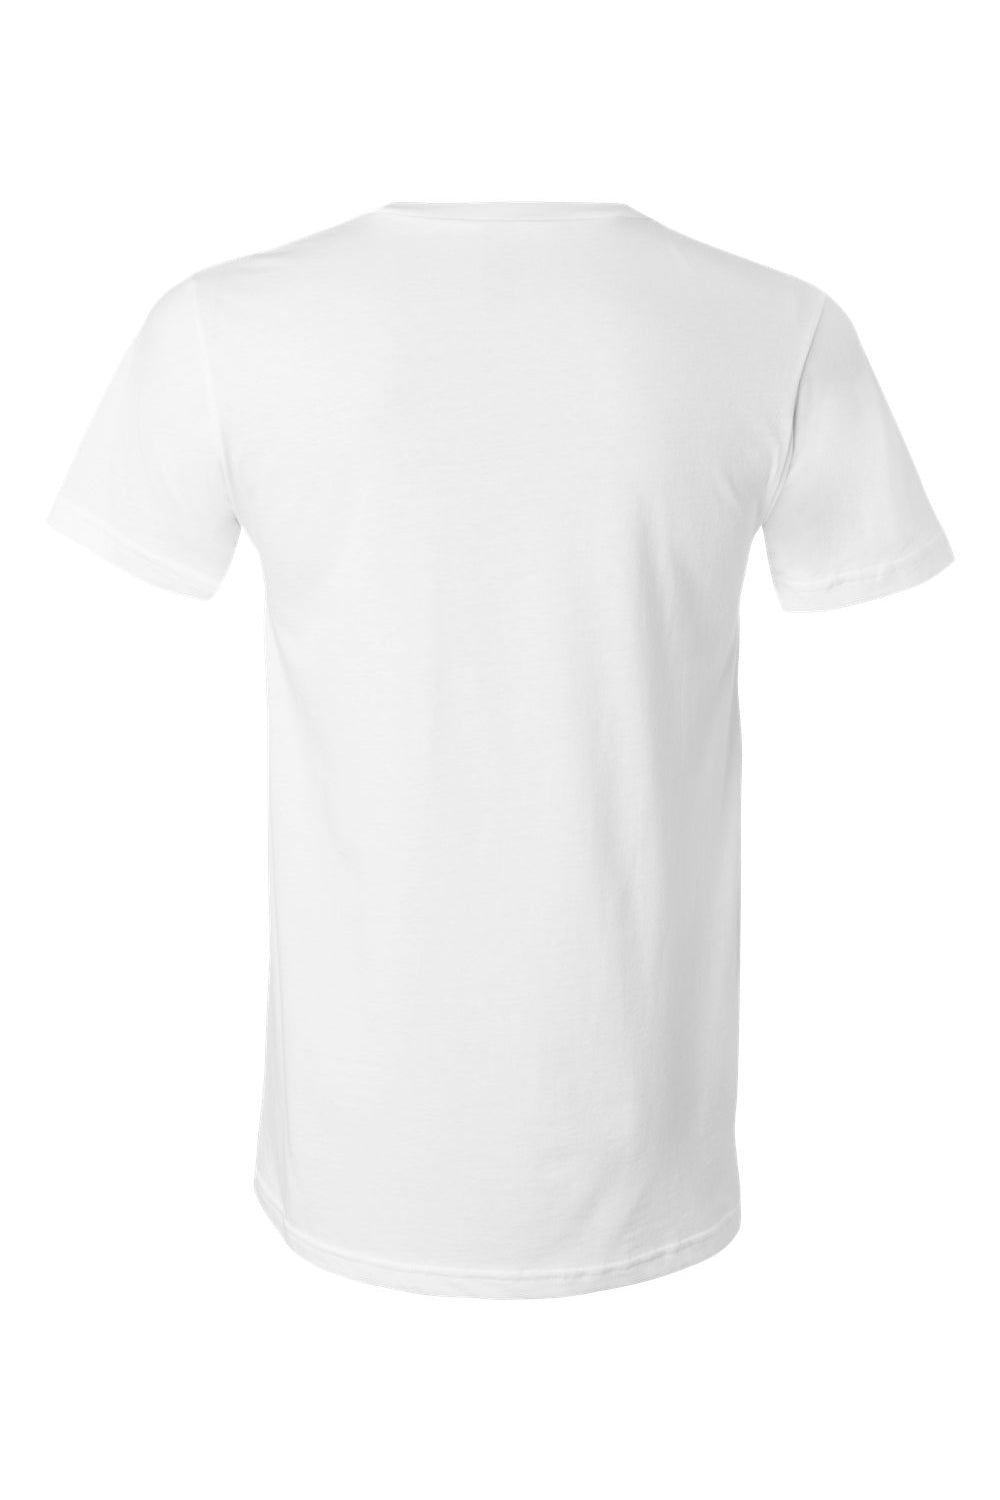 Bella + Canvas BC3005/3005/3655C Mens Jersey Short Sleeve V-Neck T-Shirt White Flat Back